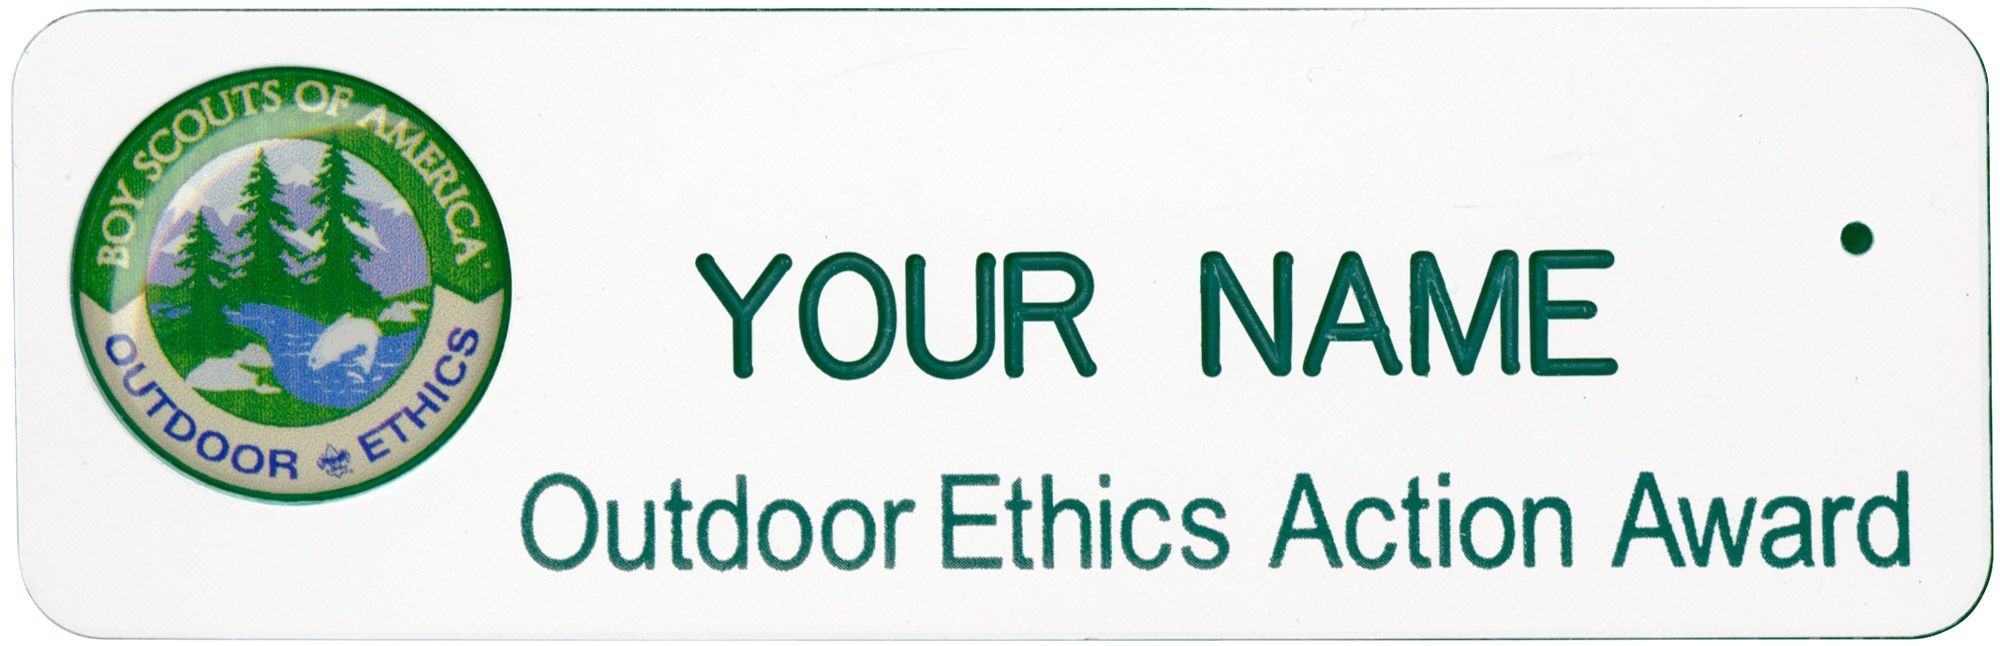 BSA Outdoor Ethics Action Award Nameplate